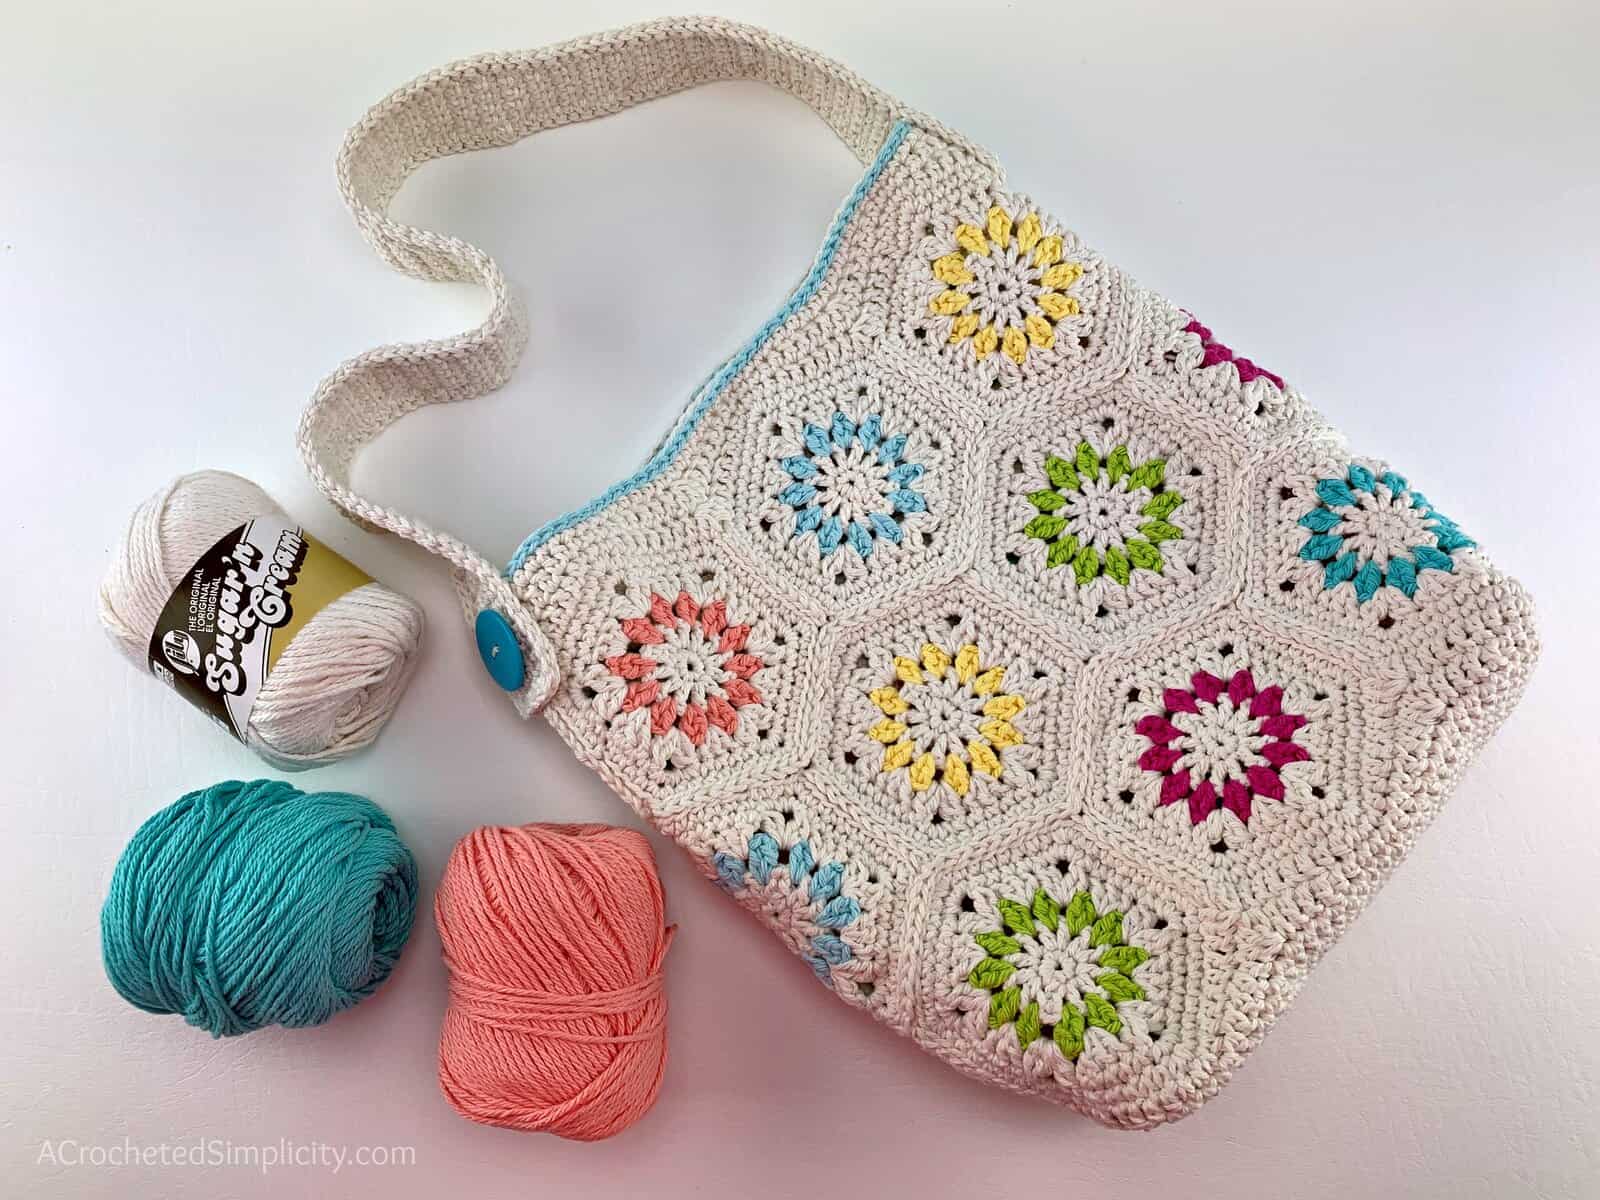 Free Crochet Tote Bag Pattern - Summer Retro Tote Bag by A Crocheted Simplicity. #freecrochetpattern #crochettotebagpattern #freecrochetbagpattern #crochetbag #crochetprojectbag #summerbag #summerretro #handmade